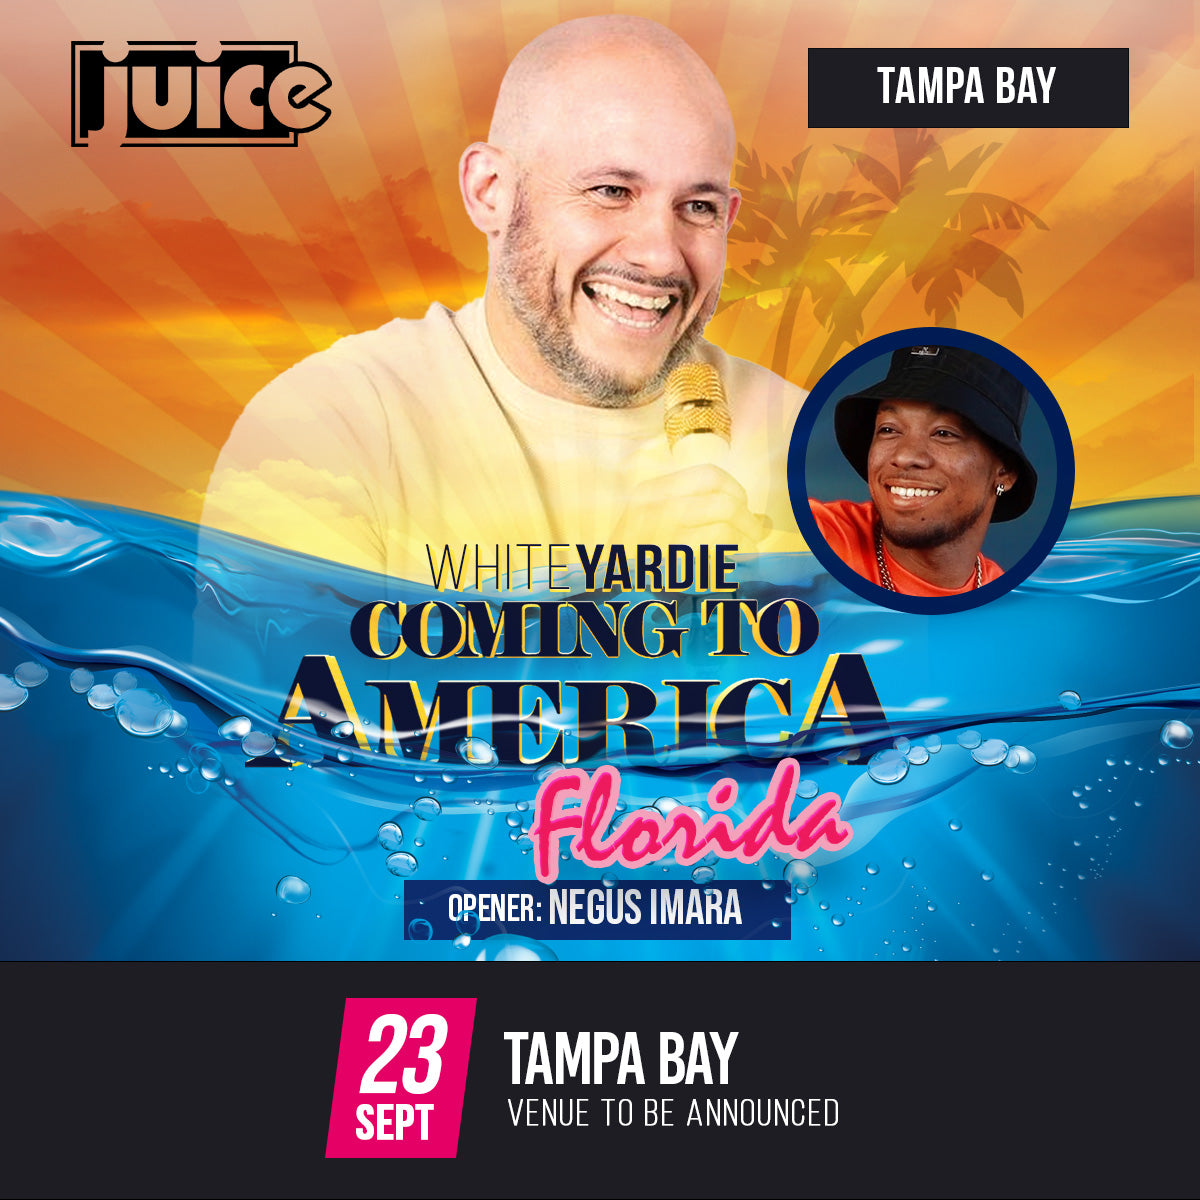 TAMPA BAY - JUICE Comedy pres White Yardie's "Coming to America" FLORIDA feat. Negus Imara